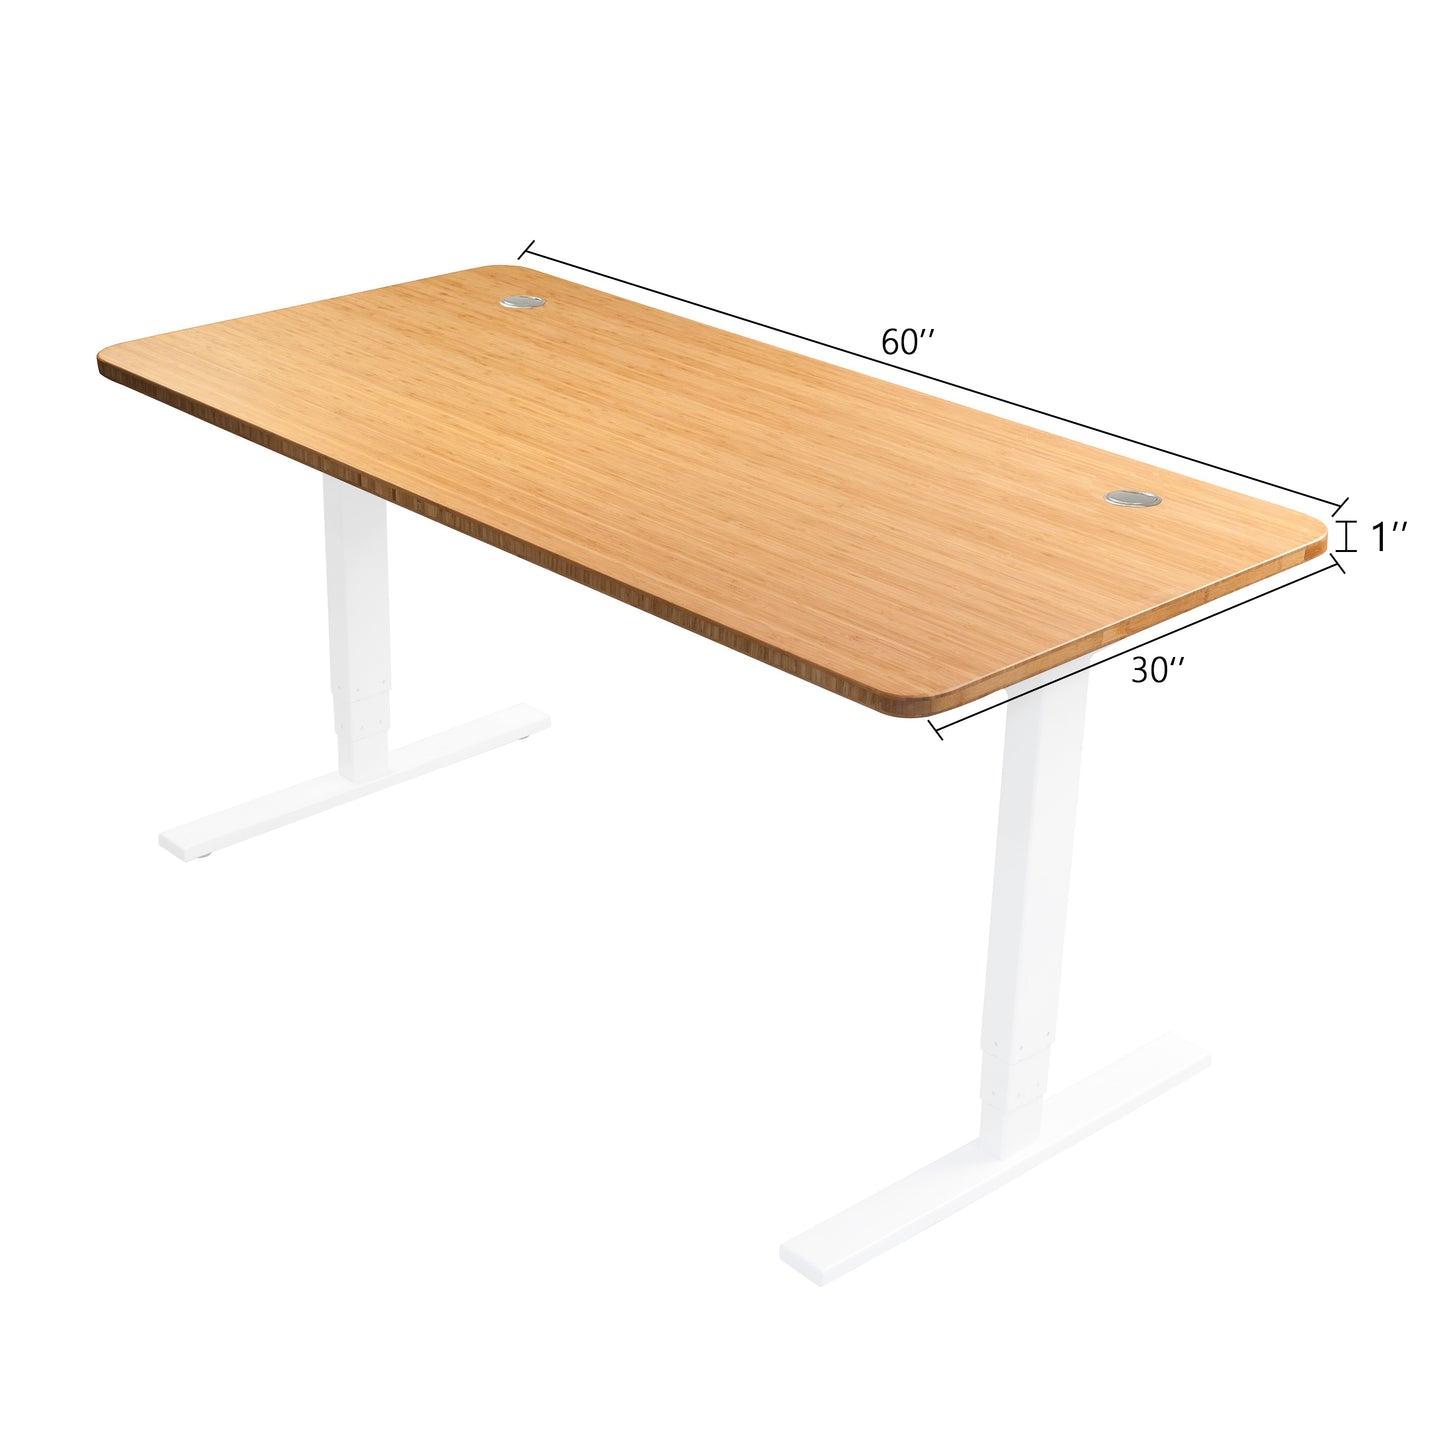 VWINDESK Mesa de escritorio de bambú natural de 60 pulgadas solamente, a juego con marco de escritorio eléctrico ajustable, duradera, sostenible con orificios para ojales de 80 mm (30" x 60" x 1") ángulo redondo